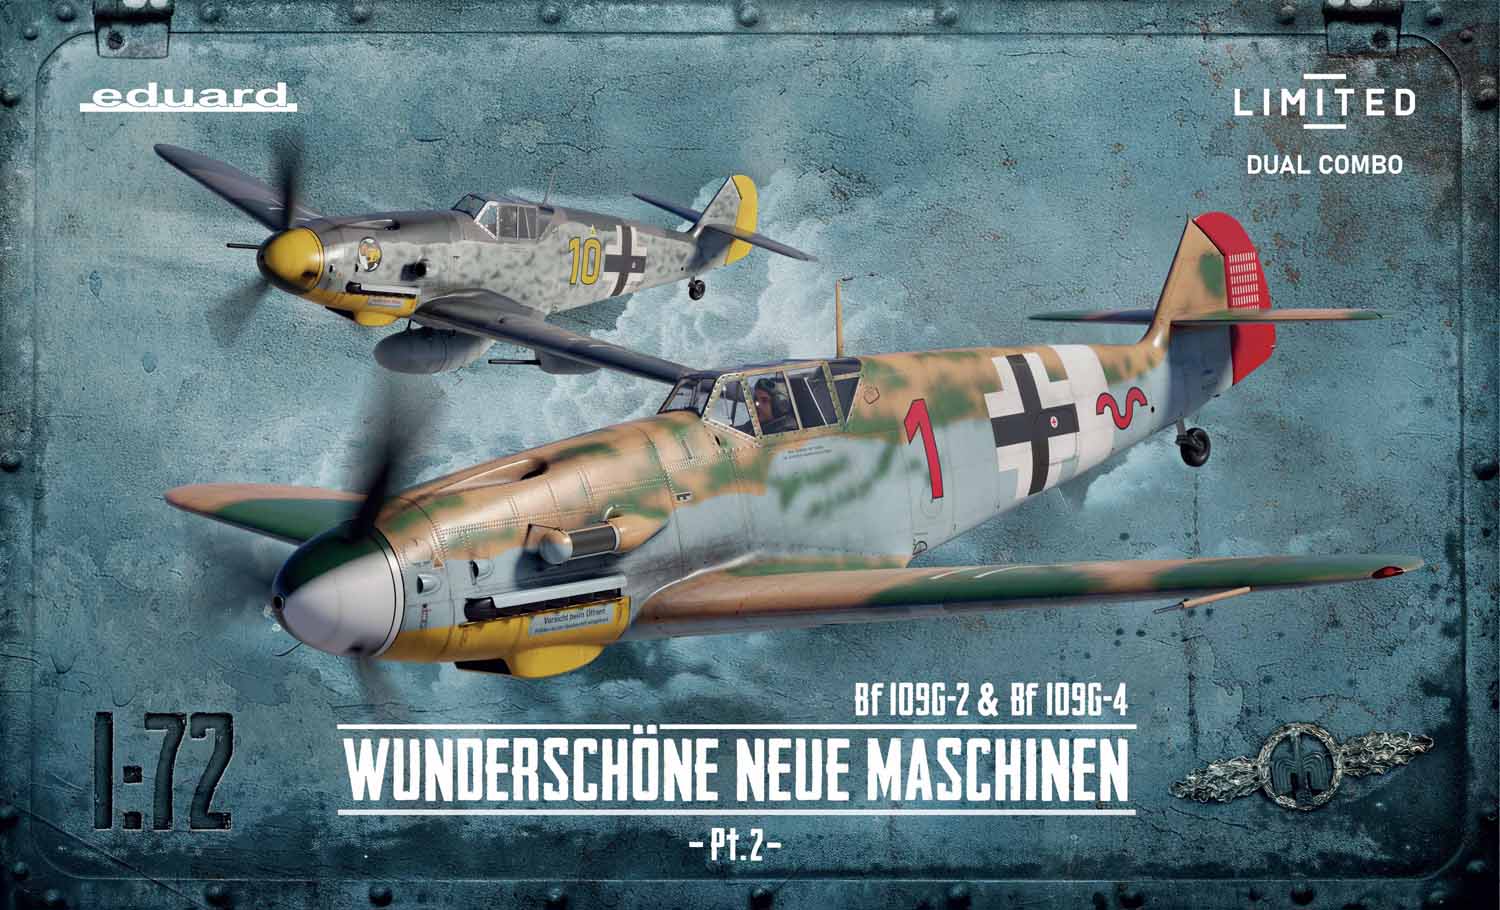 Model kit 1/72 Messerschmitt Bf-109G-2/G-4 The Limited edition DUAL COMBO (Eduard kits)